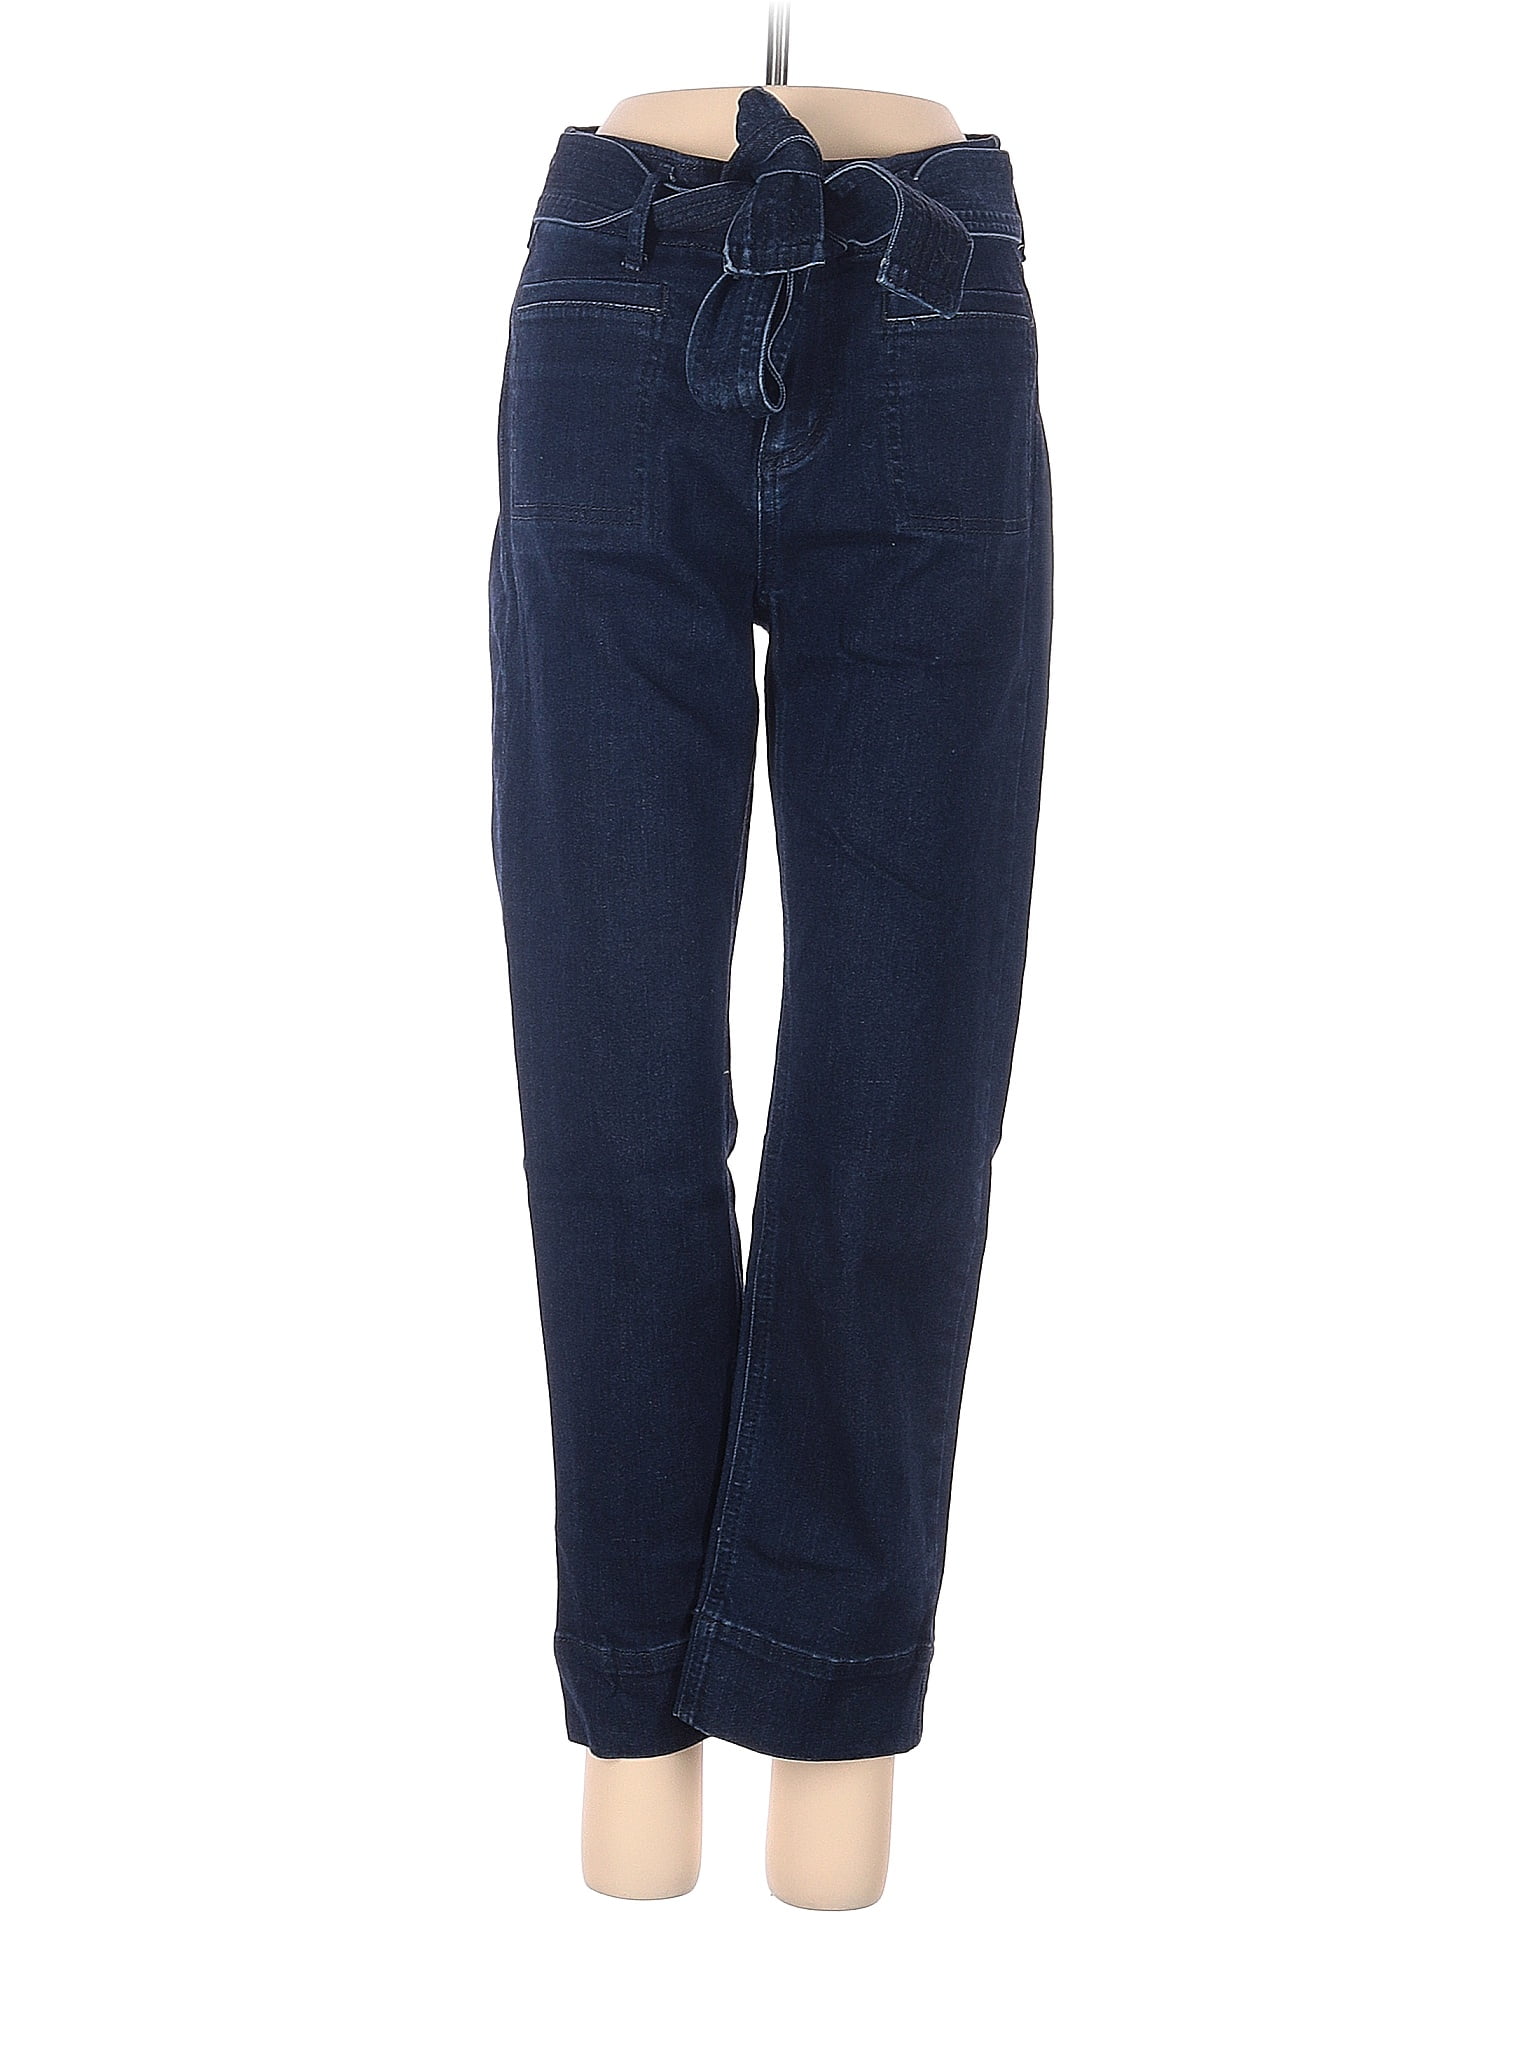 Ann Taylor LOFT Solid Blue Jeans Size 00 (Petite) - 76% off | thredUP